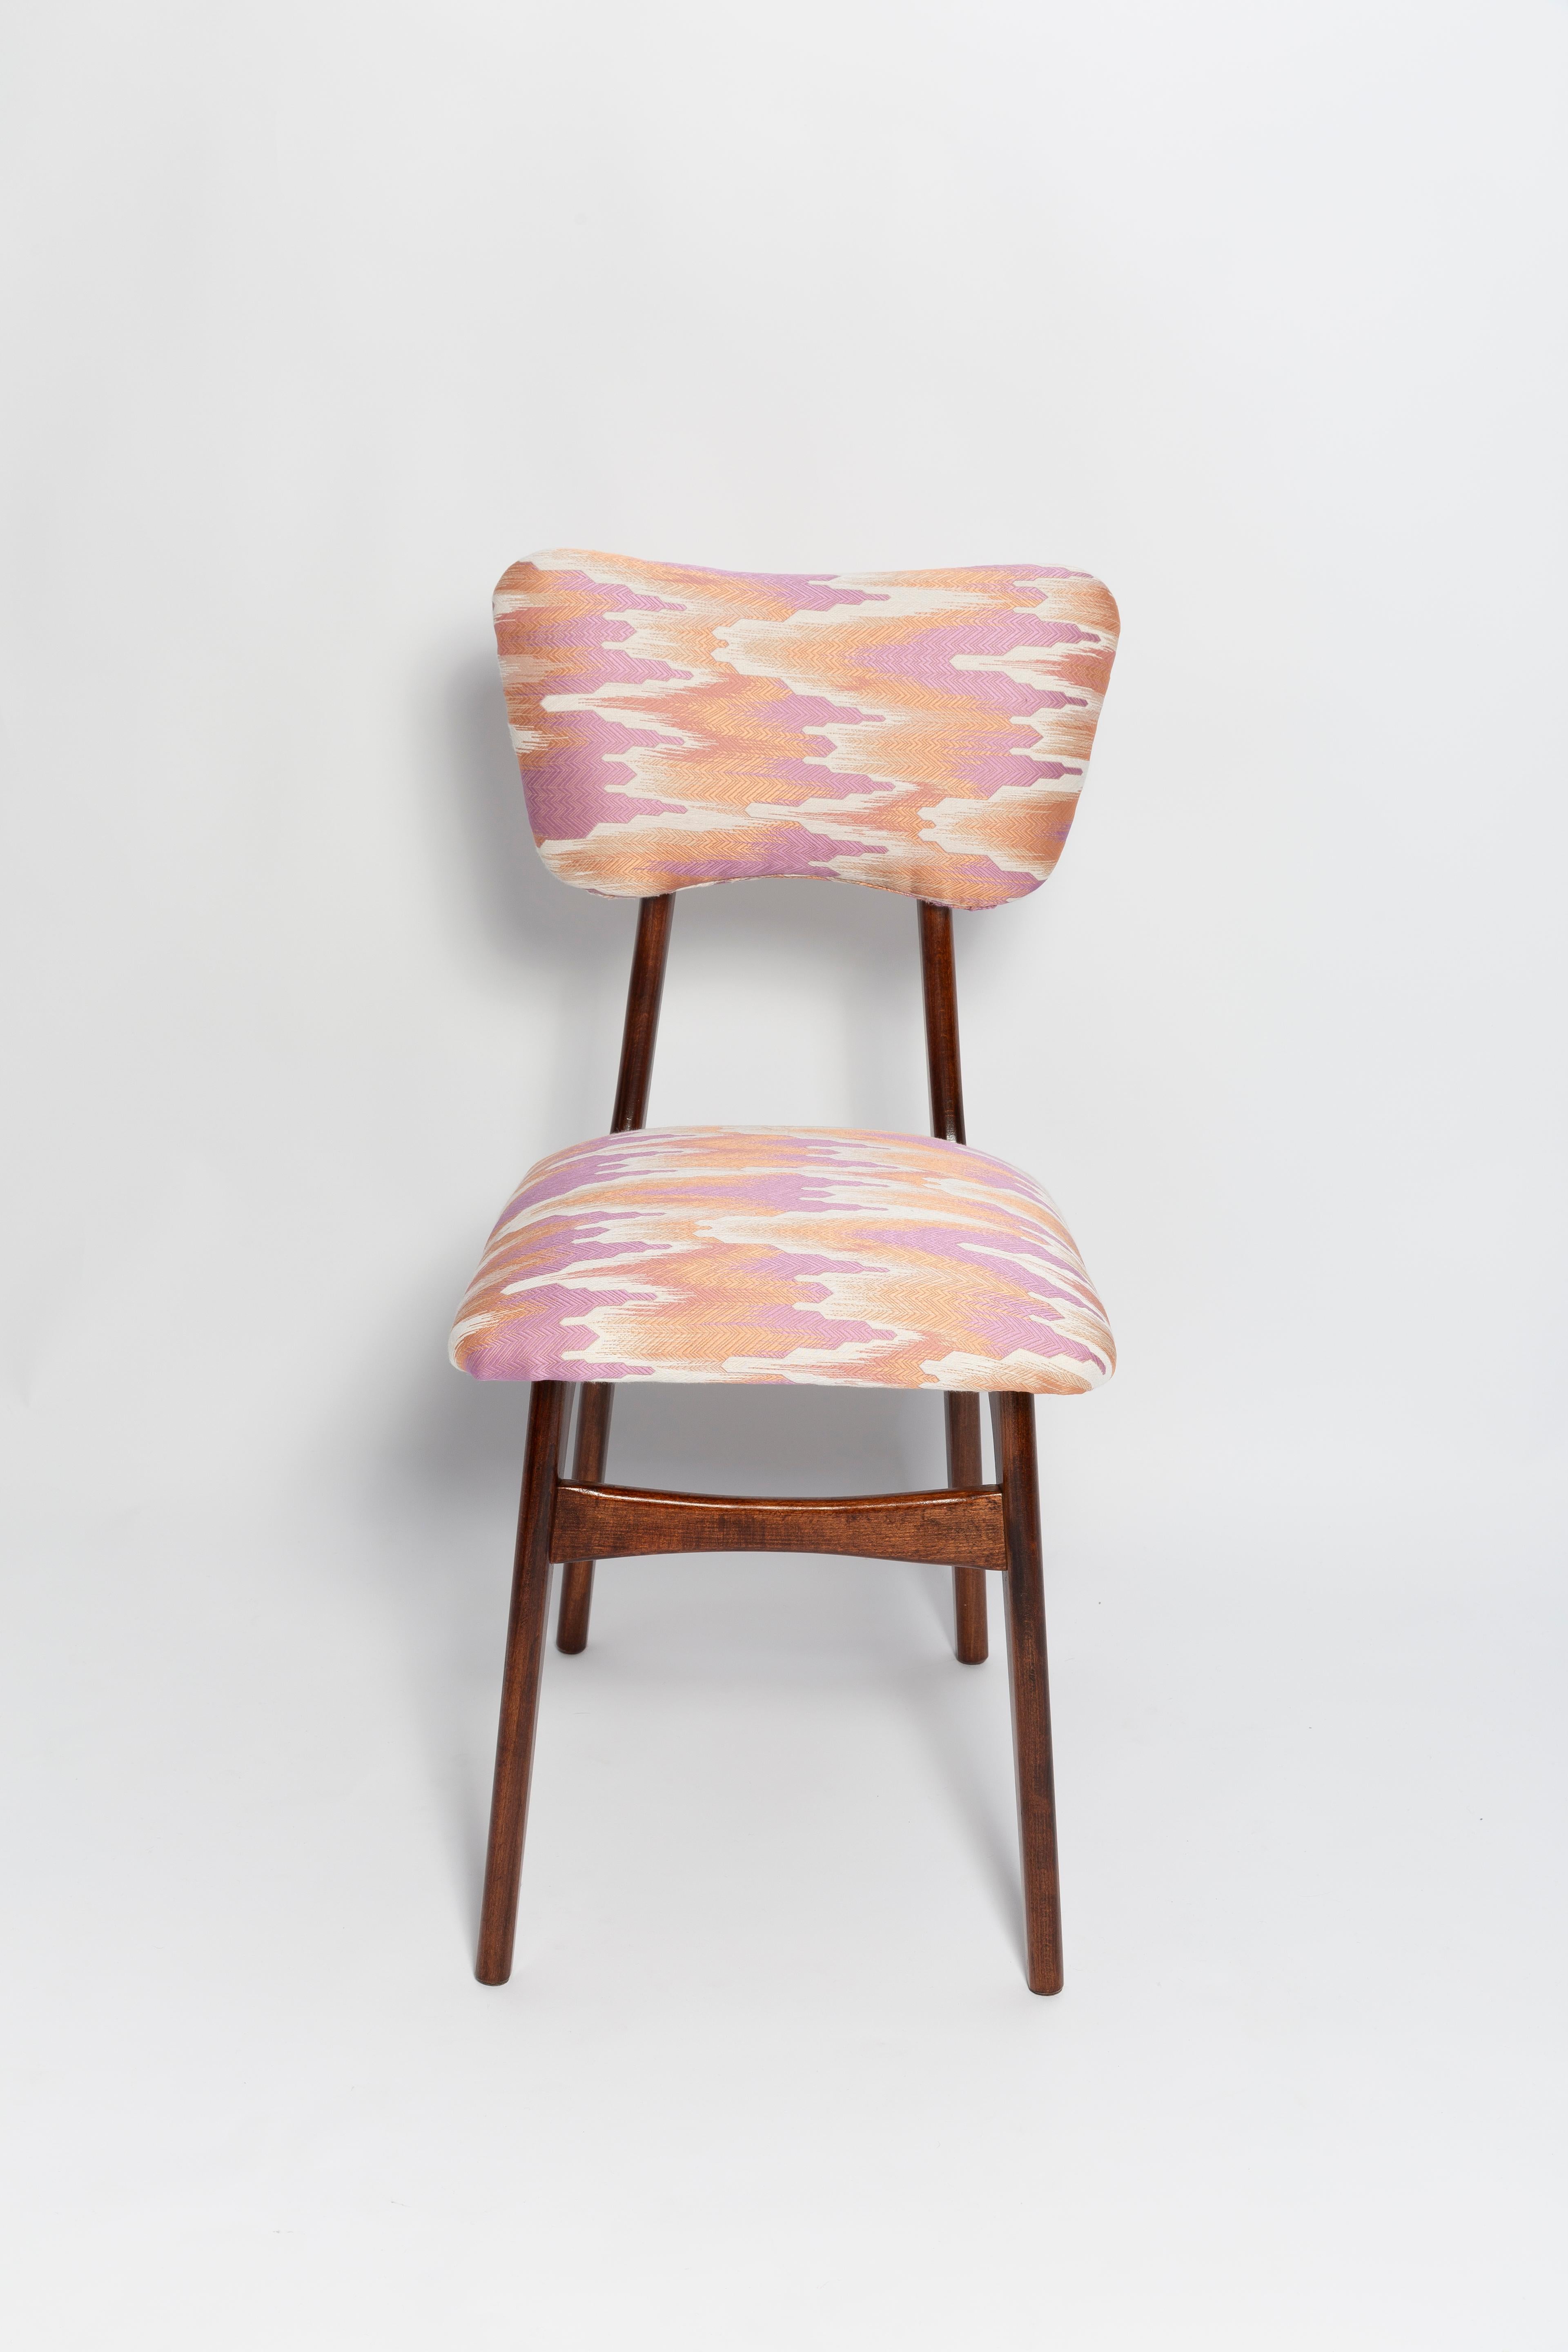 Polish Mid Century Butterfly Chair, Pink Fandango Jacquard, Dark Wood, Europe, 1960s For Sale